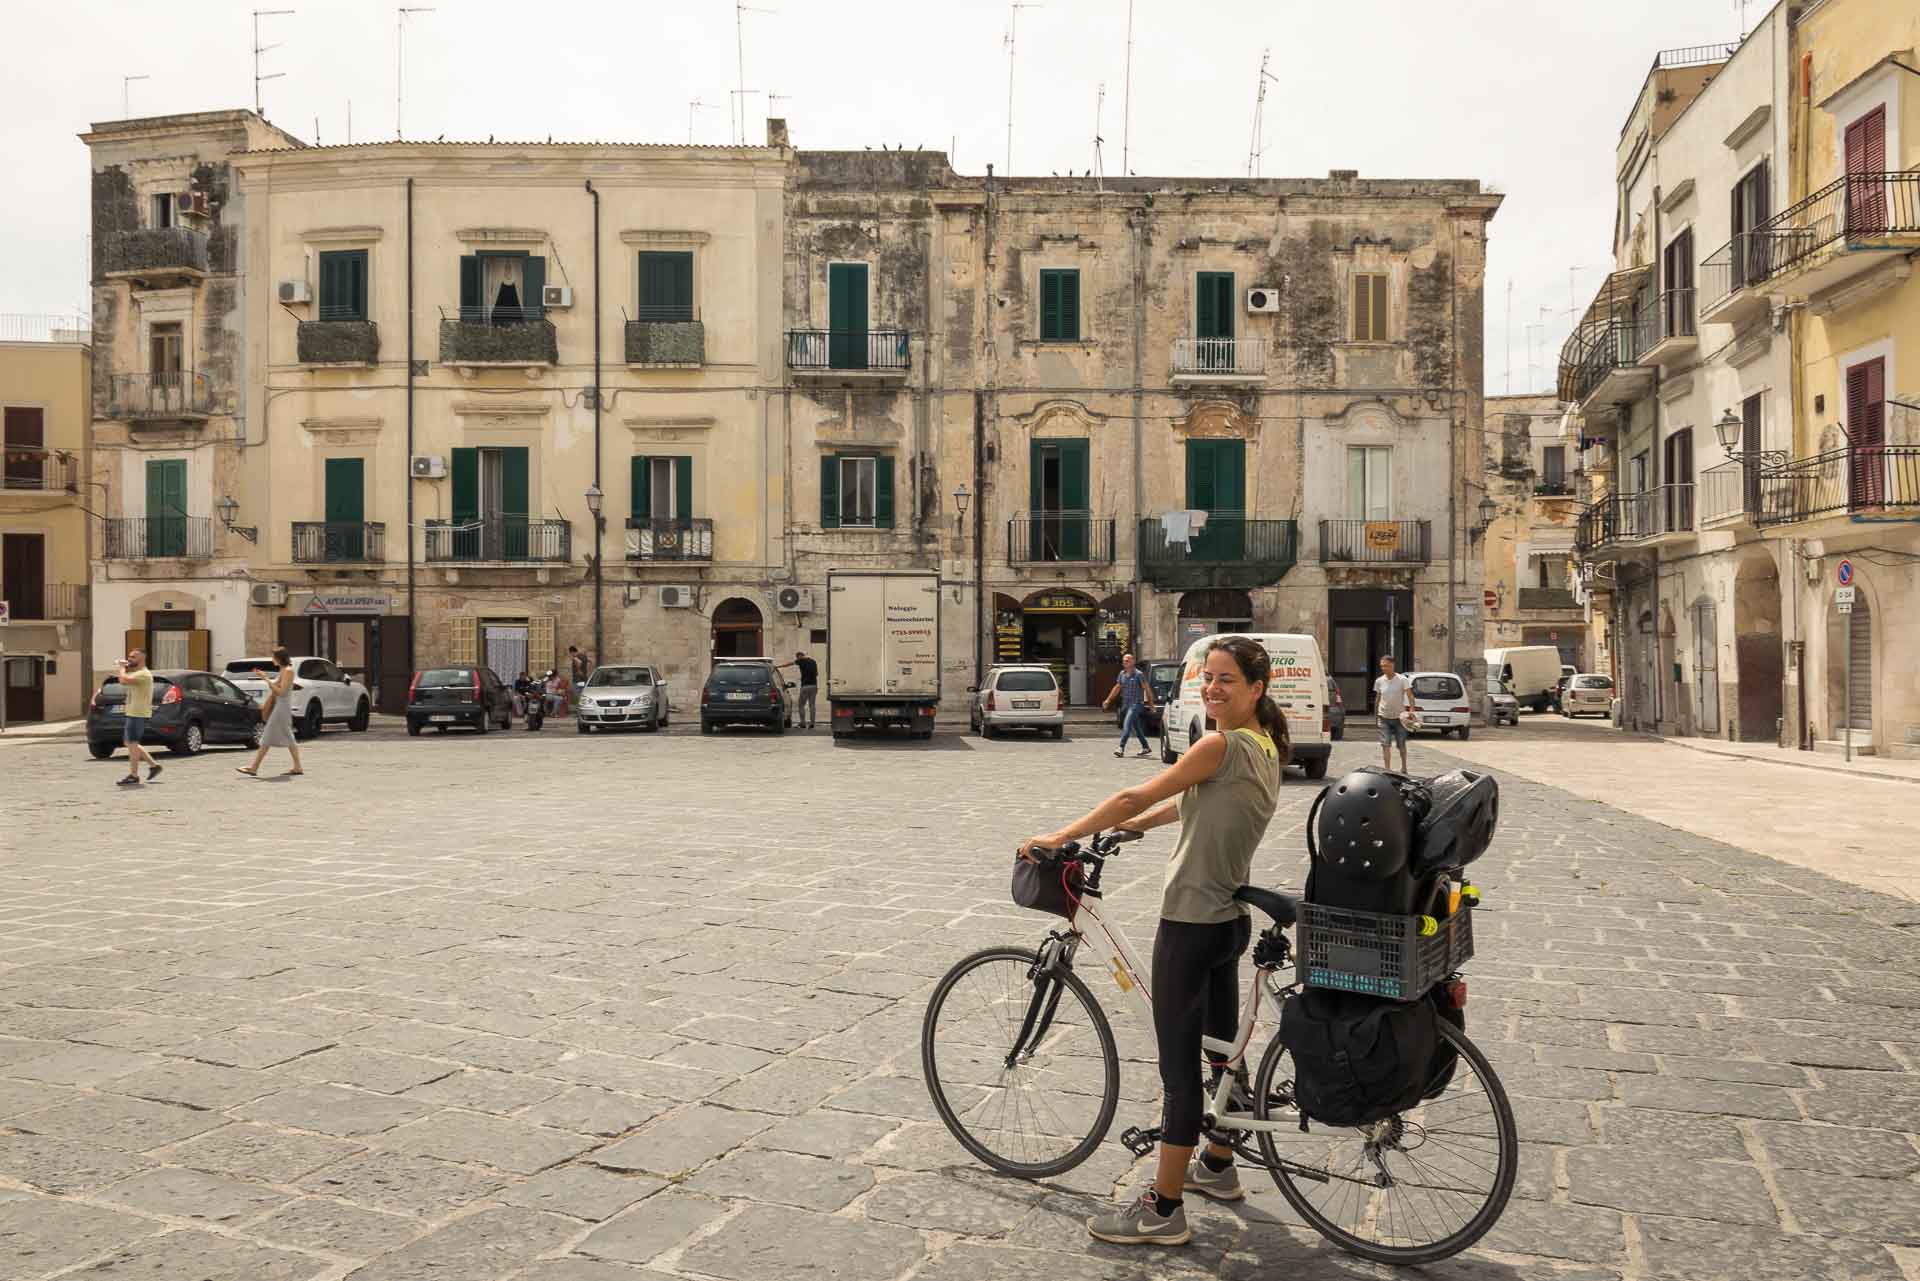 Fernanda on her bike arriving in the middle of the square in Bari, Puglia